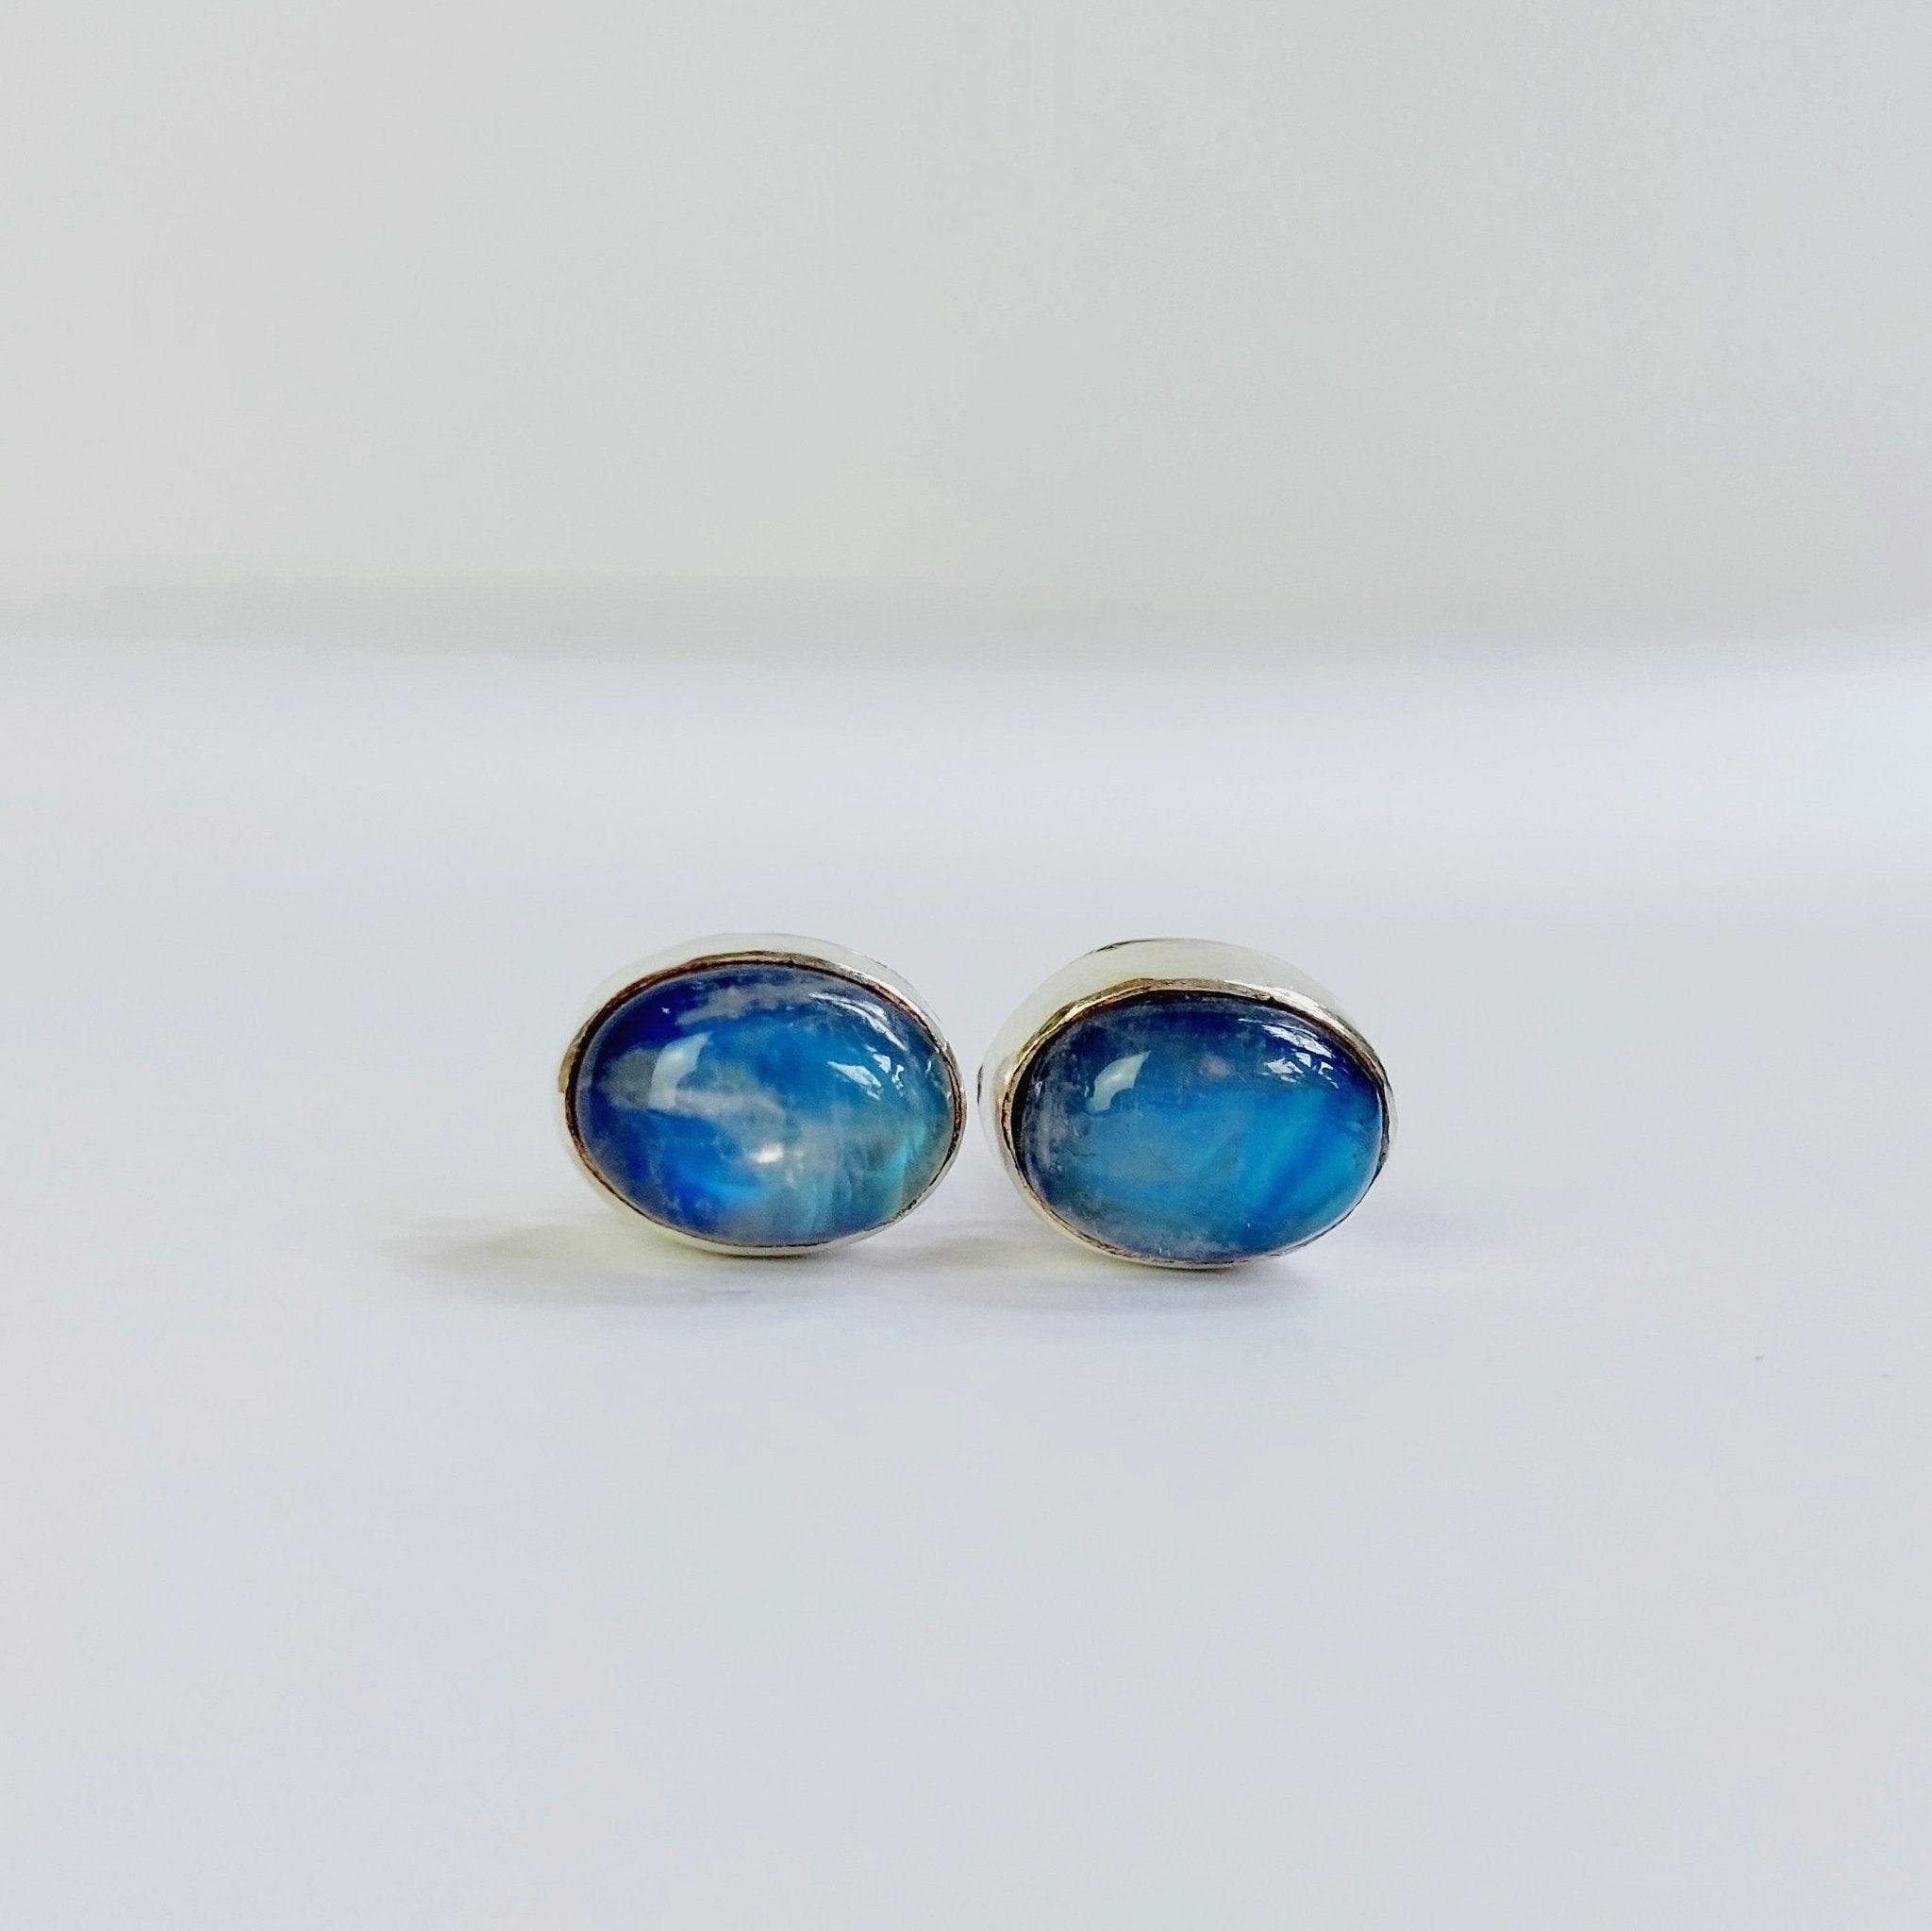 Blue Moonstone Stud Earrings - The Nancy Smillie Shop - Art, Jewellery & Designer Gifts Glasgow